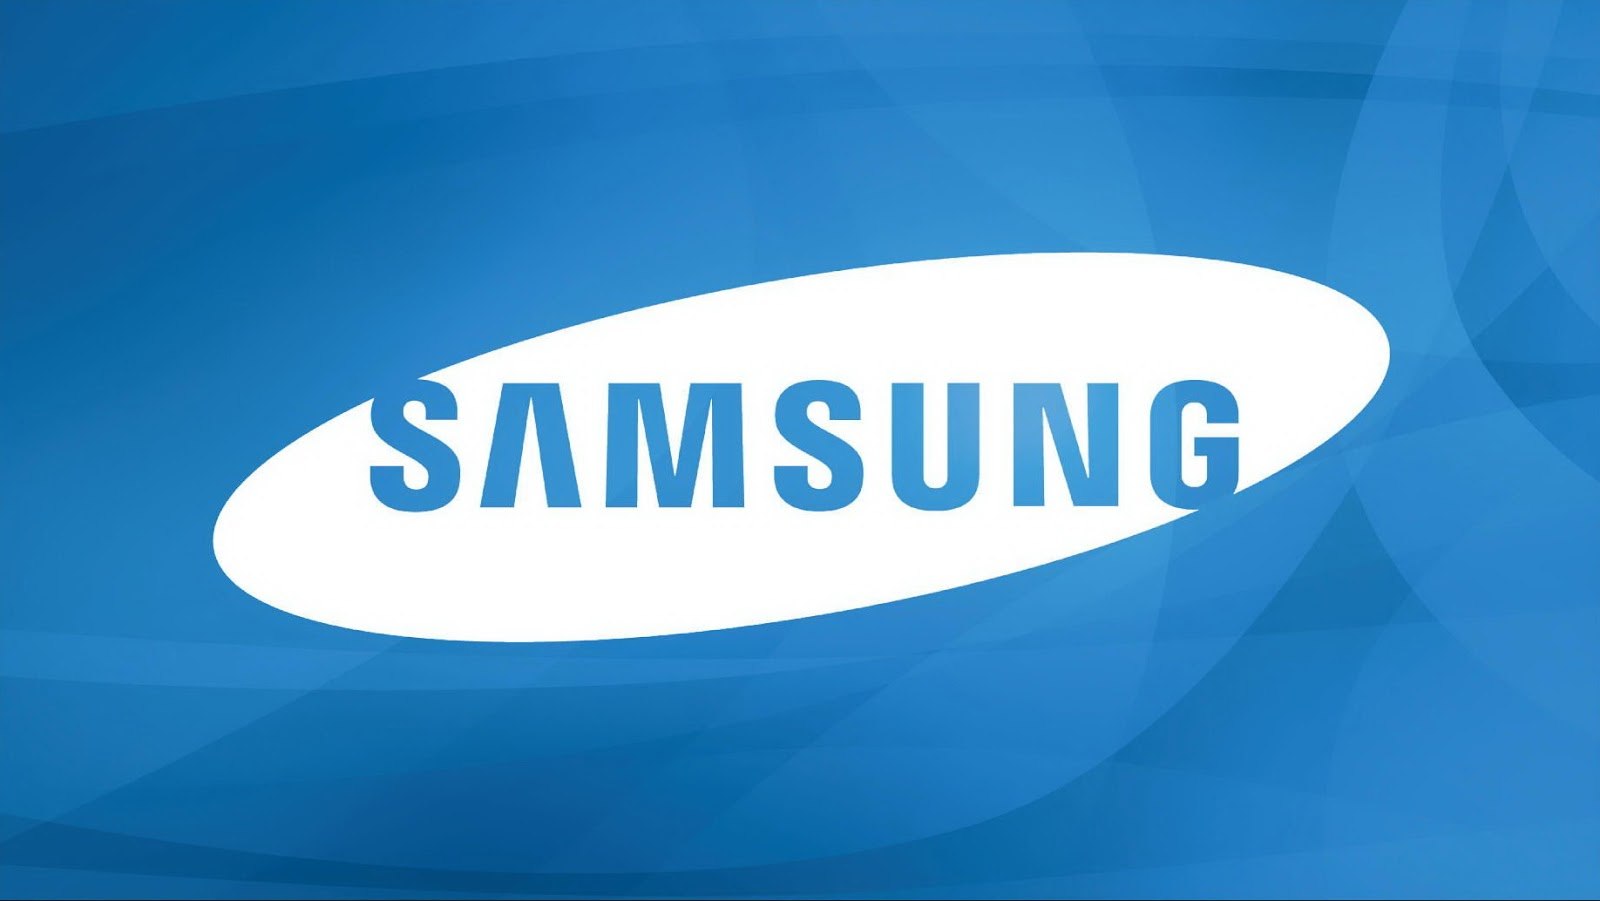 Samsung Официальный